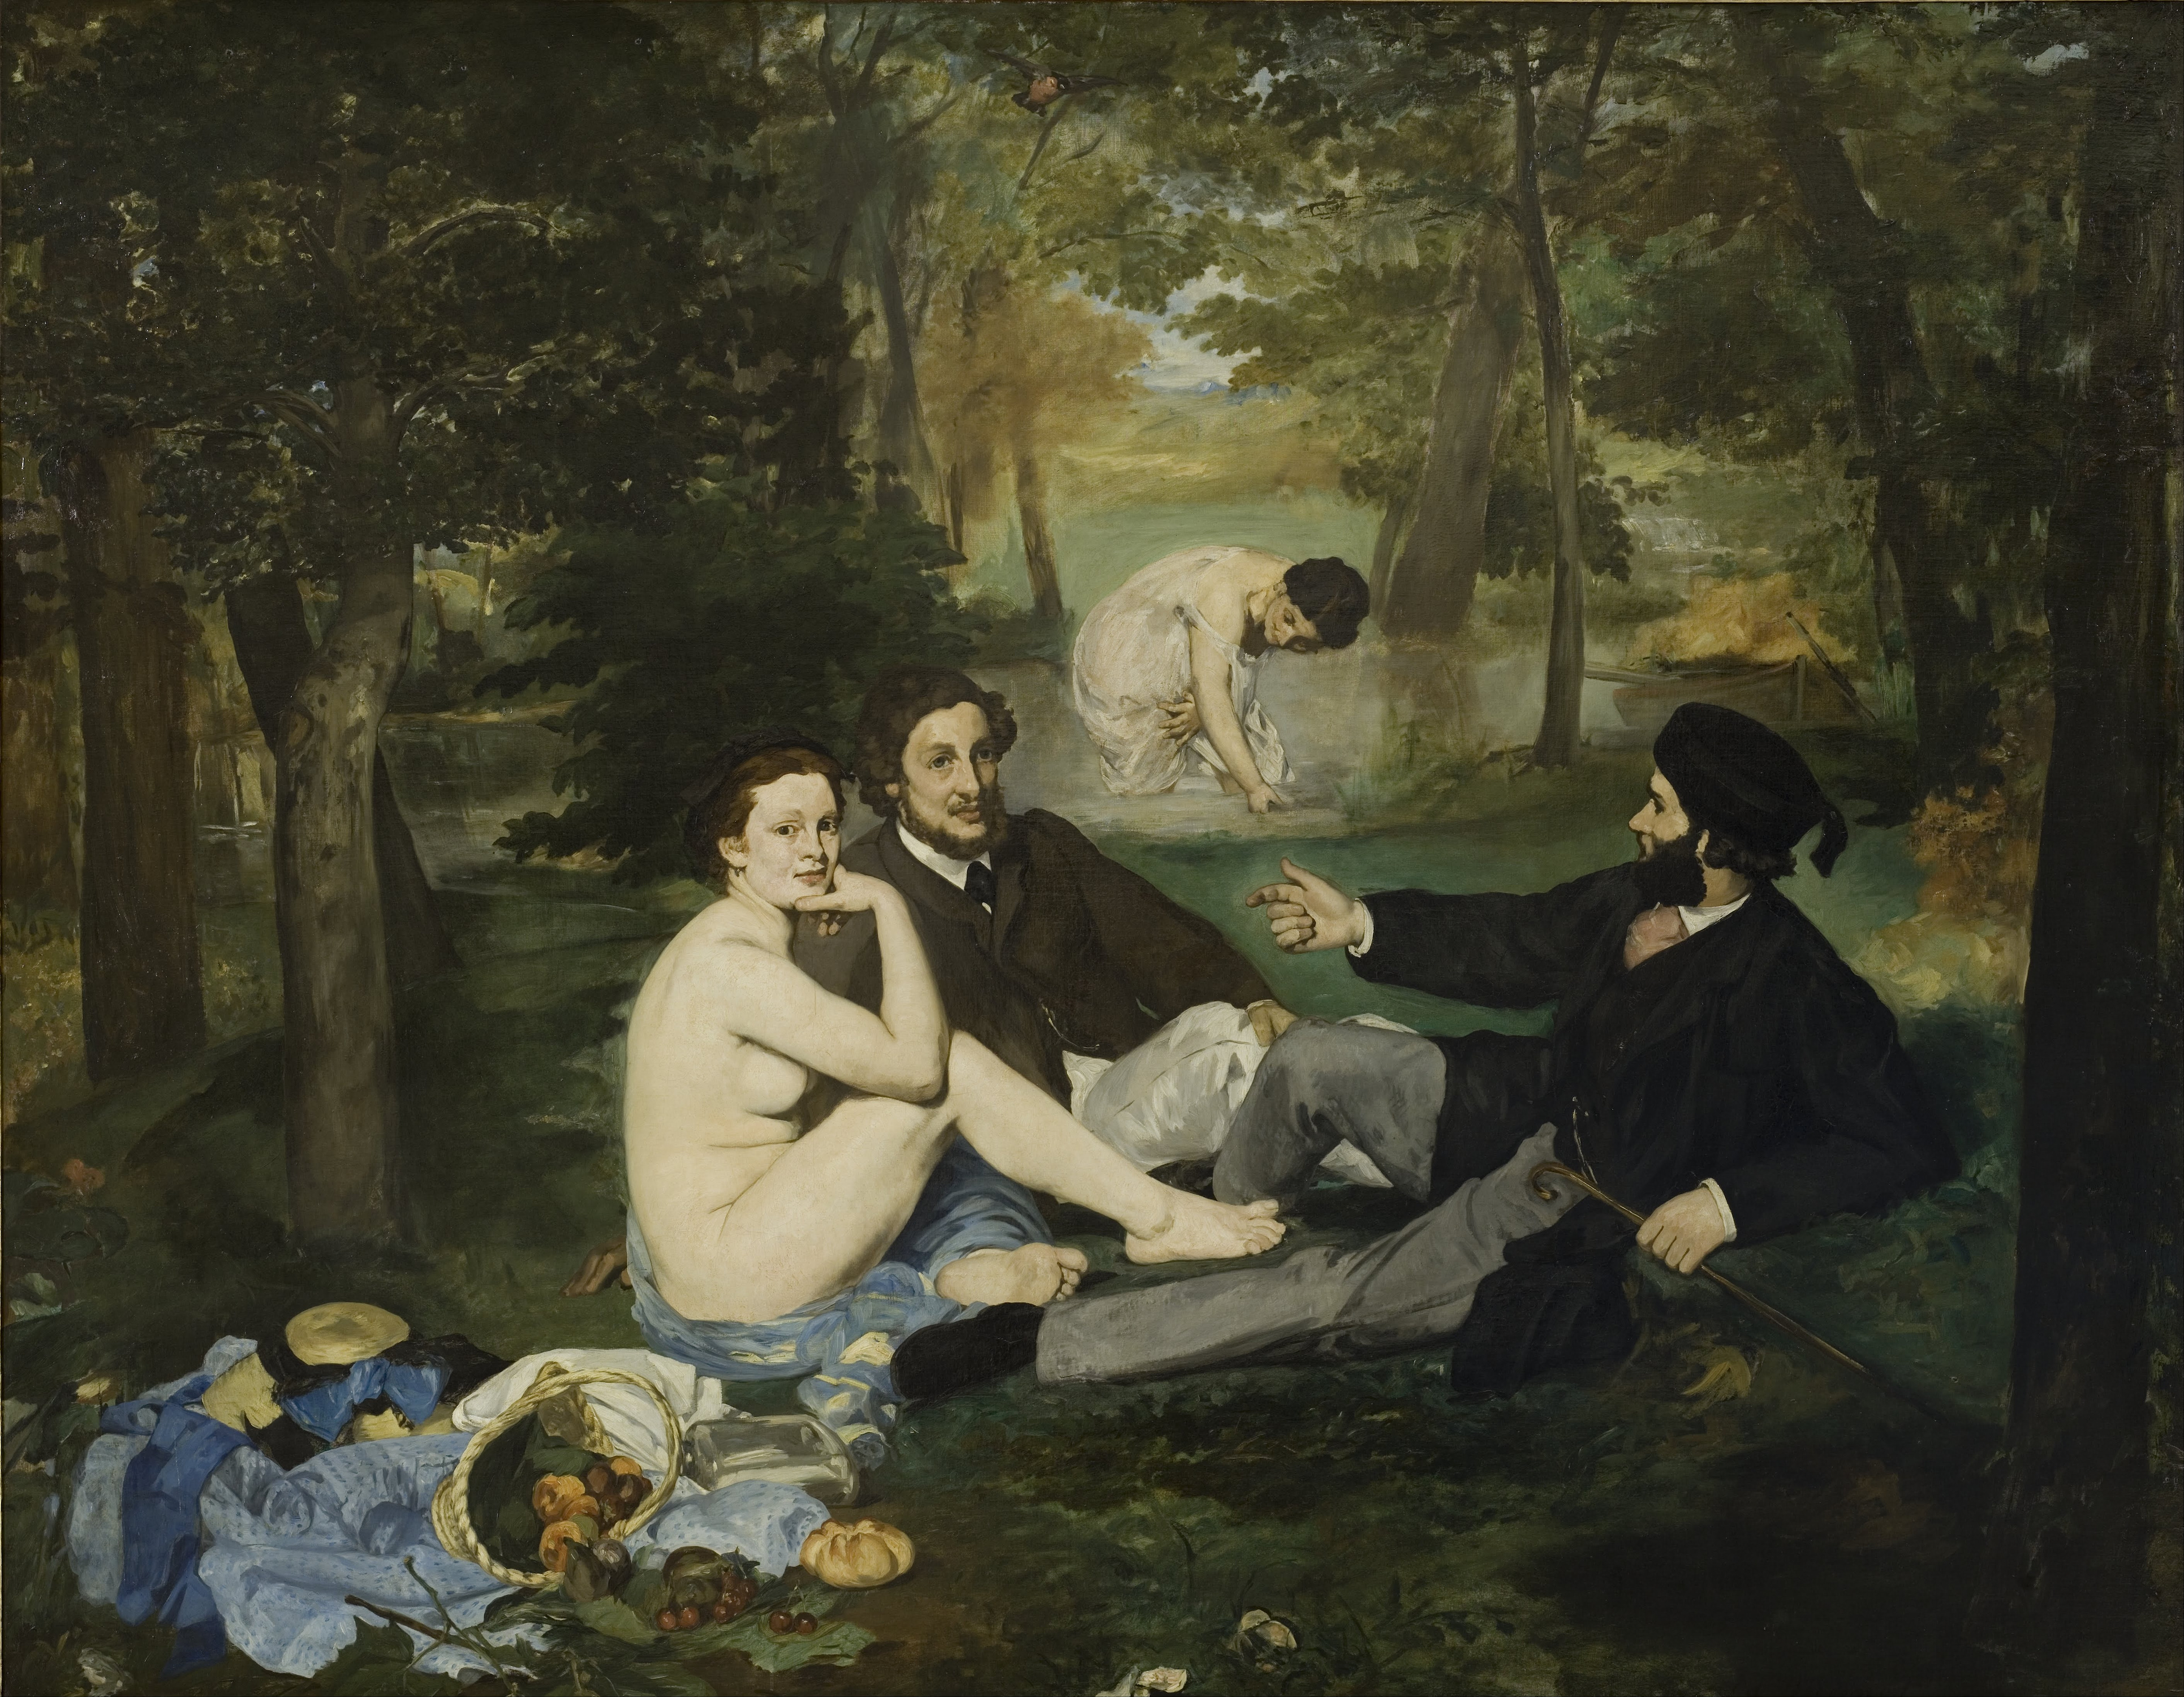  La colazione sull'erba by Édouard Manet - 1862-1863 - 208 × 265 cm Musée d'Orsay